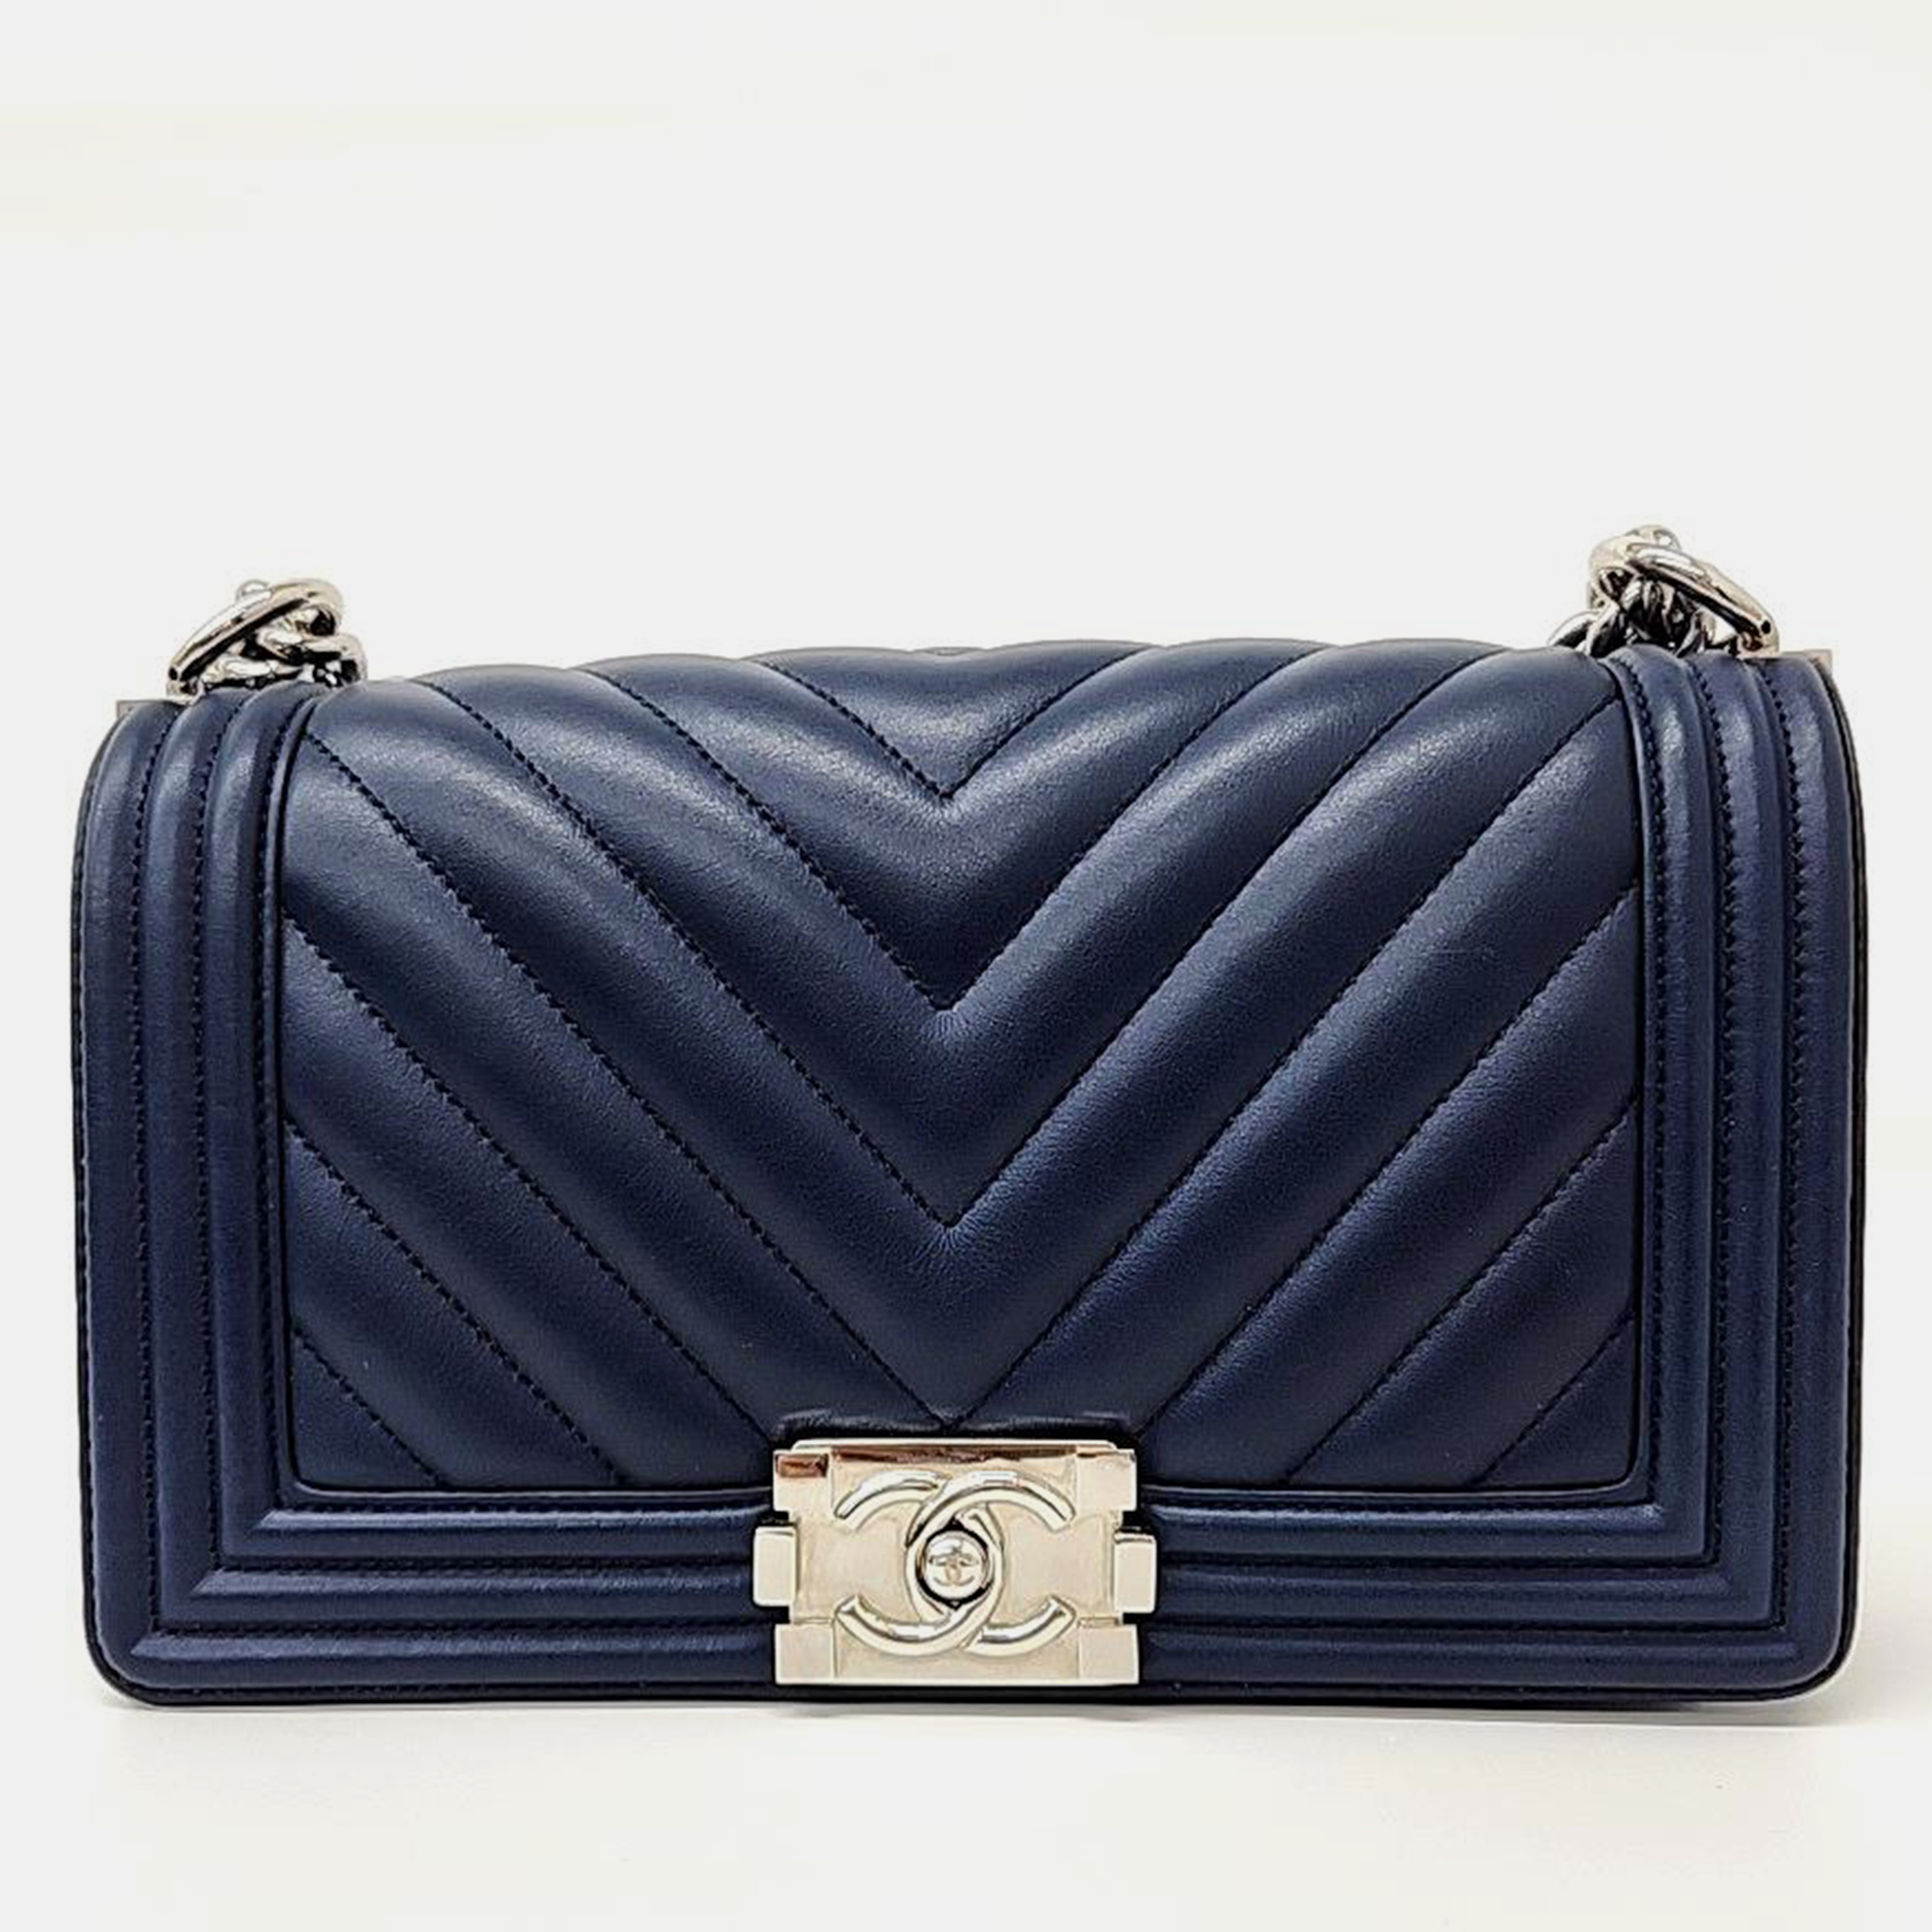 Chanel navy blue chevron leather medium boy bag